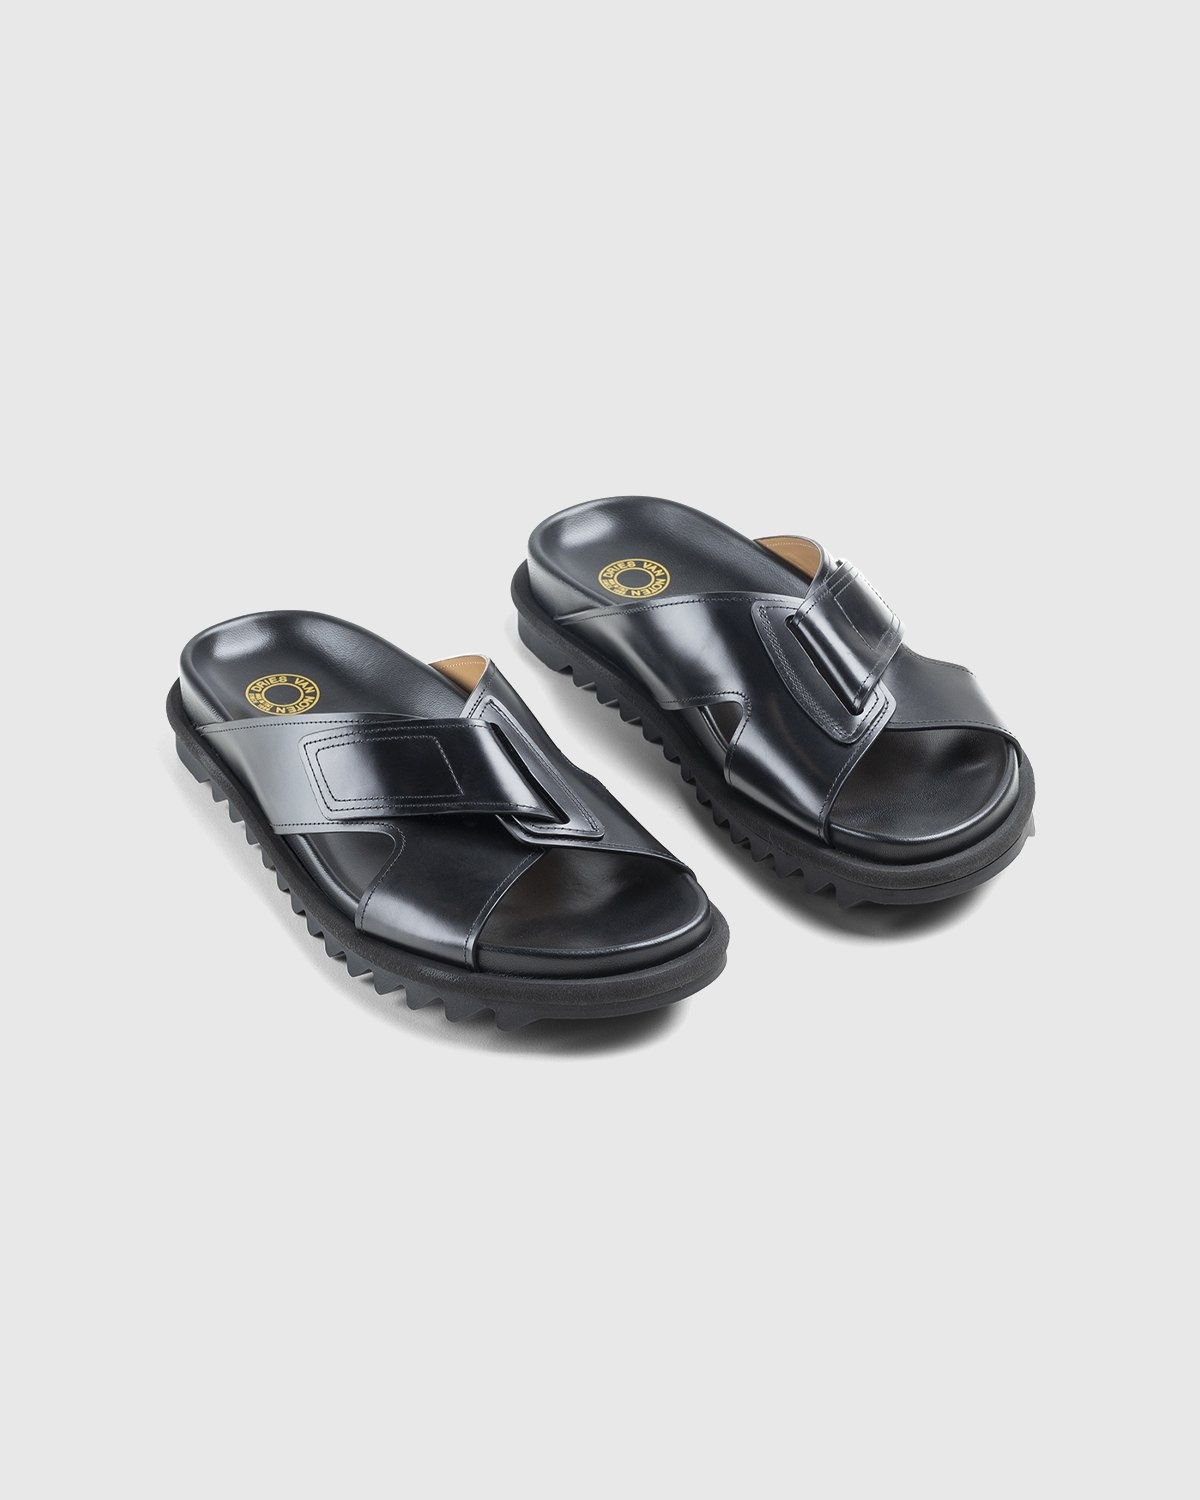 Dries van Noten – Leather Criss-Cross Sandals Black - Sandals & Slides - Black - Image 3